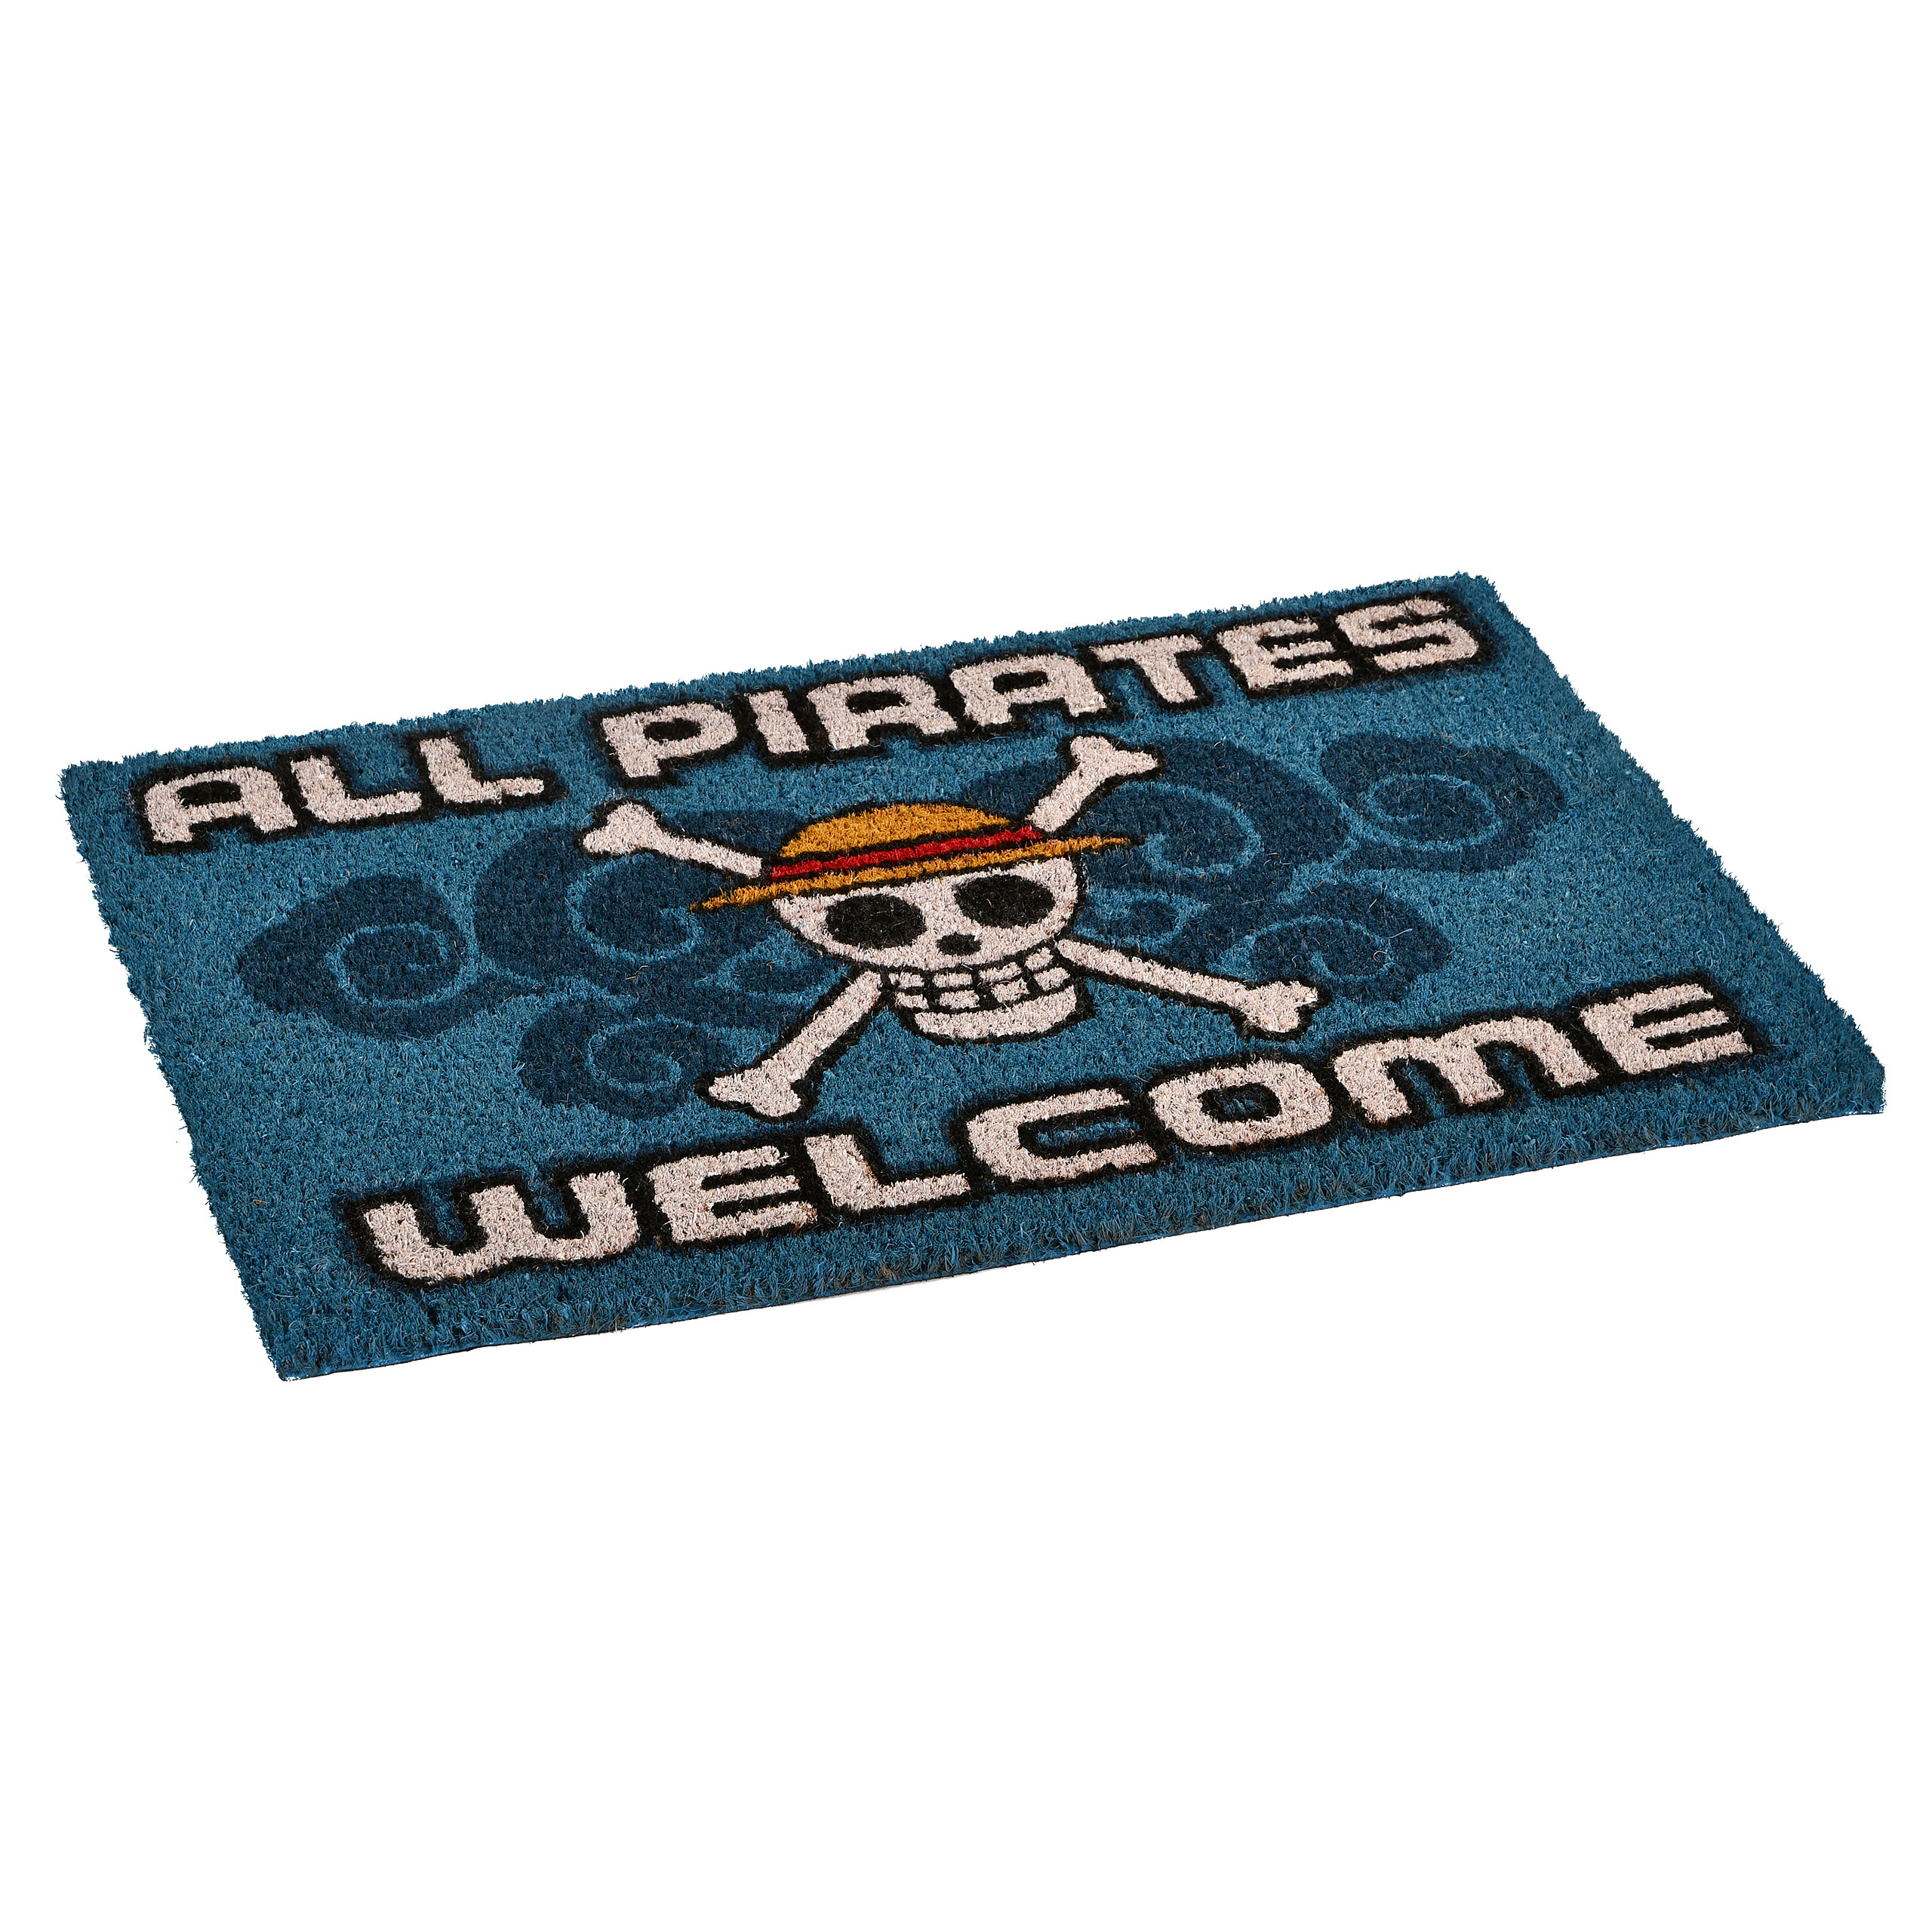 One Piece - All Pirates Welcome Fußmatte